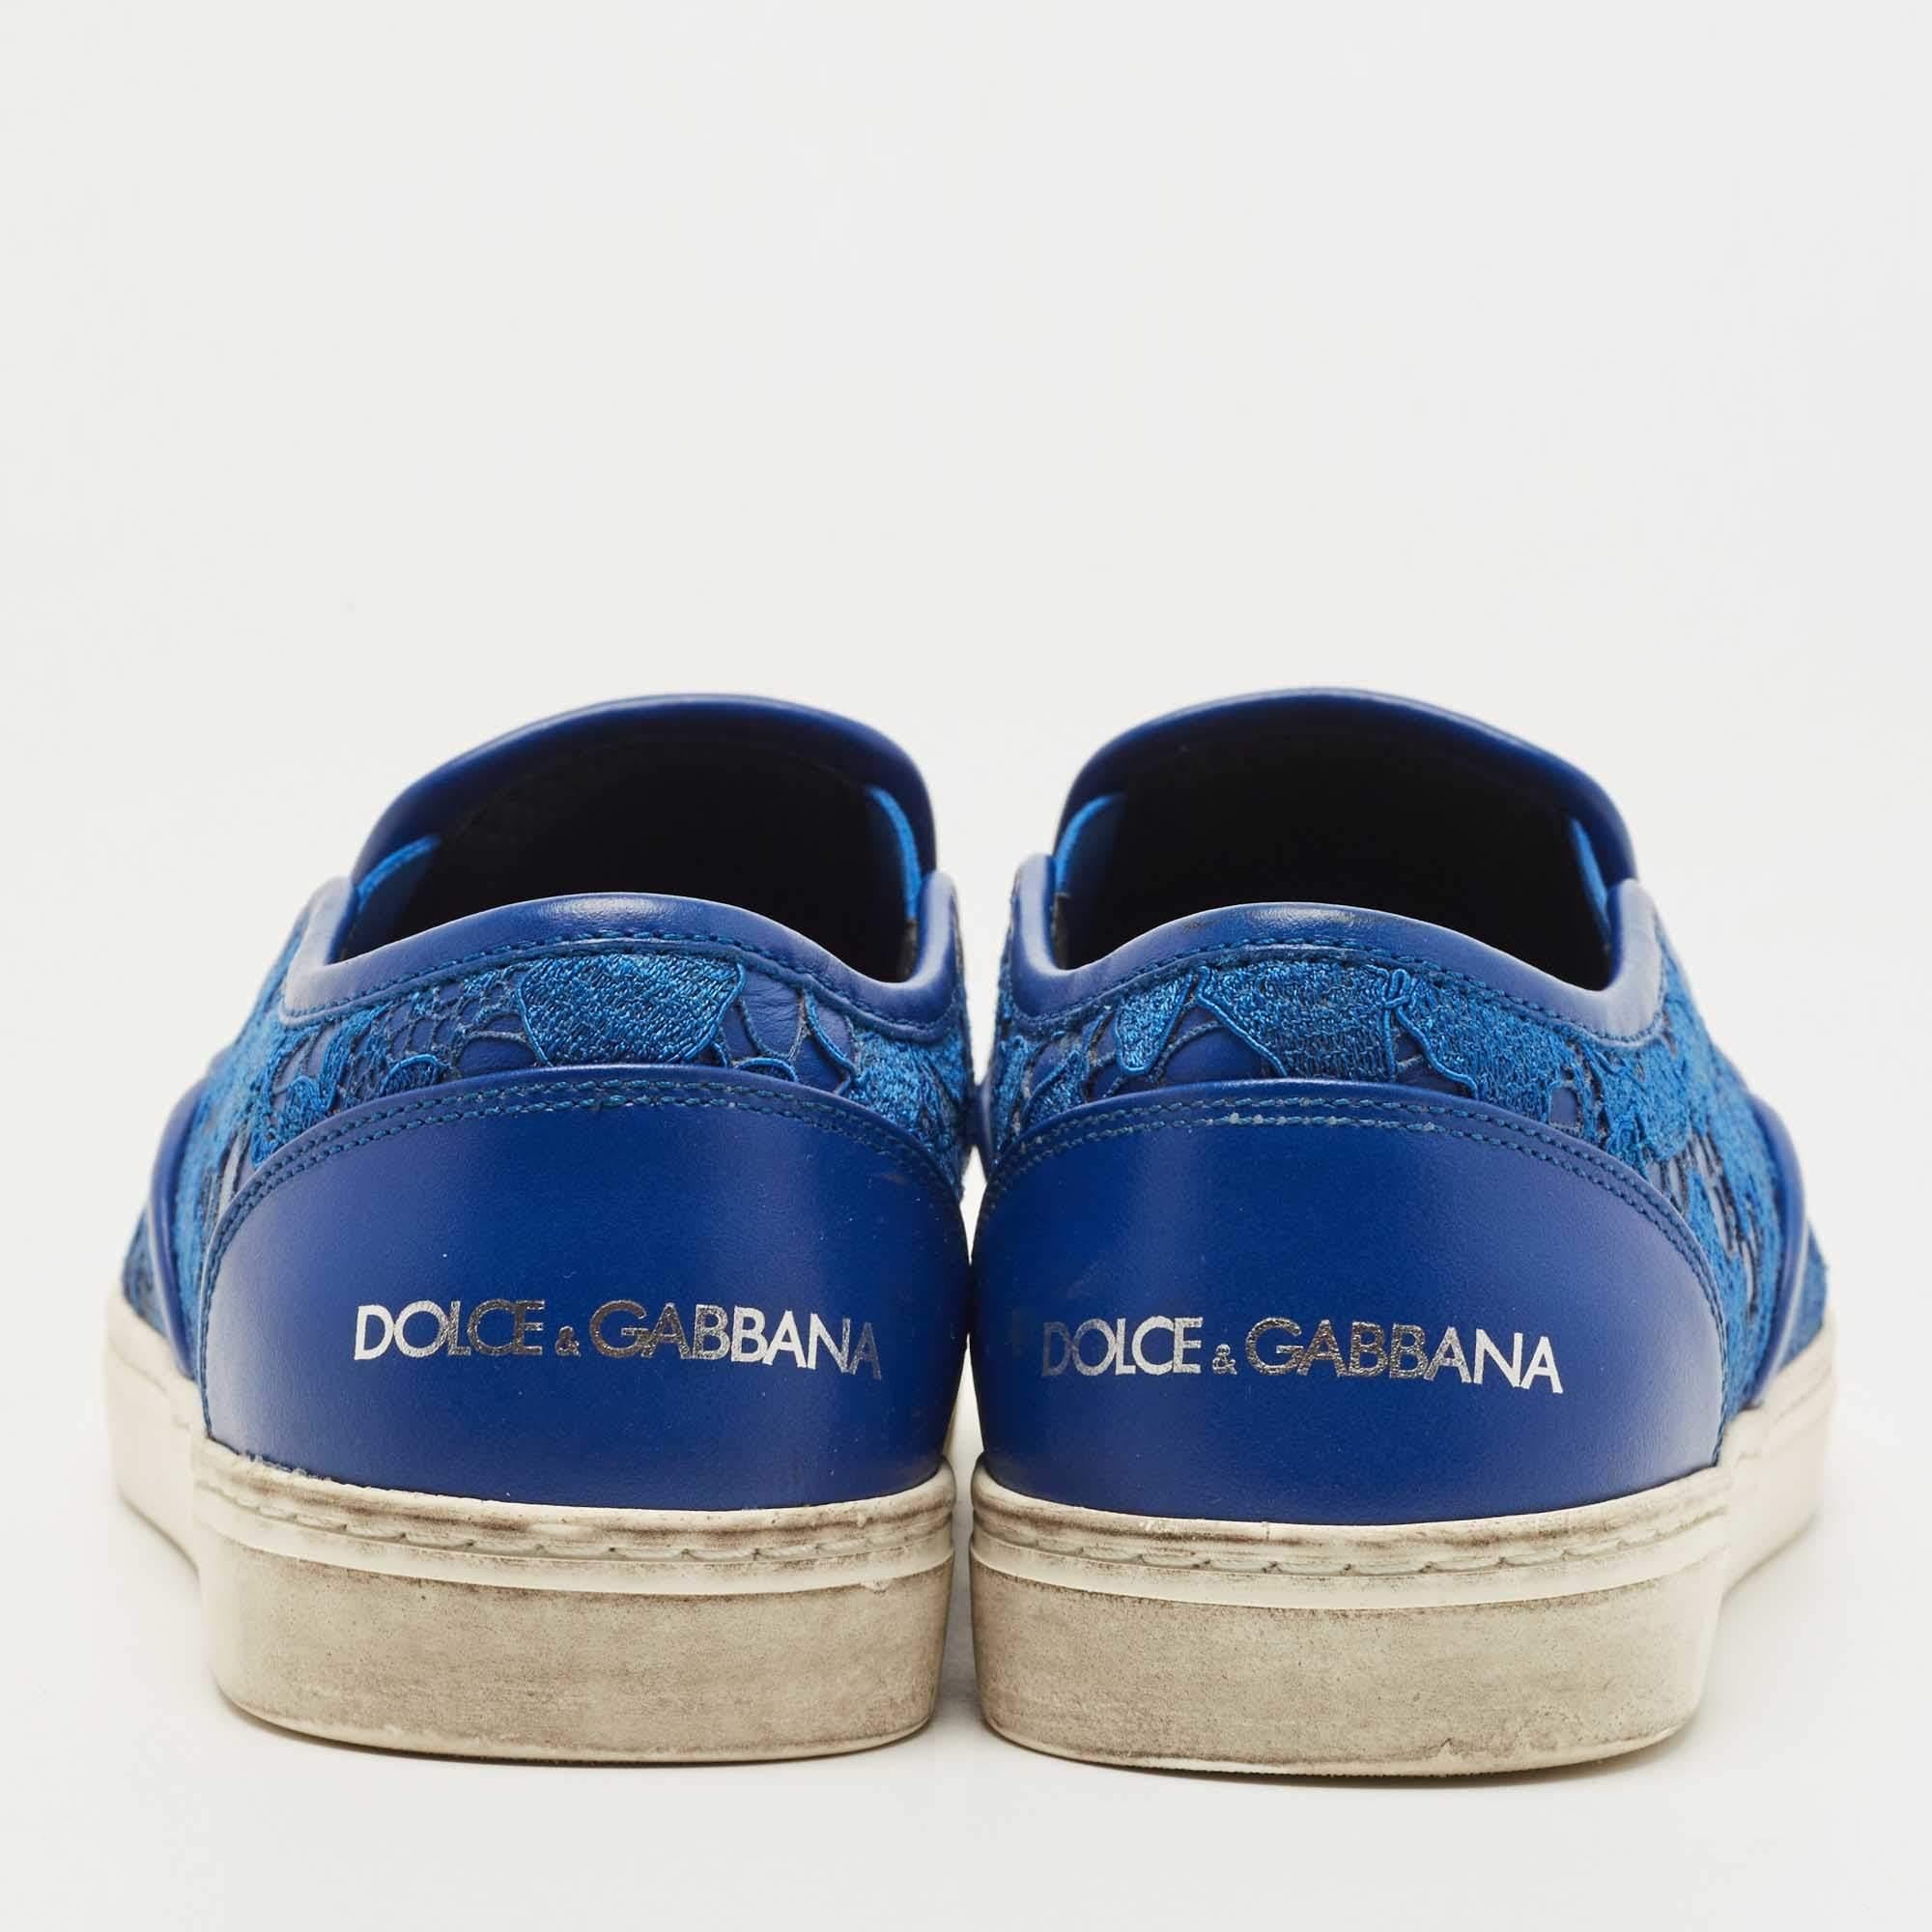 Dolce & Gabbana Blue Lace Slip On Sneakers Size 38 1